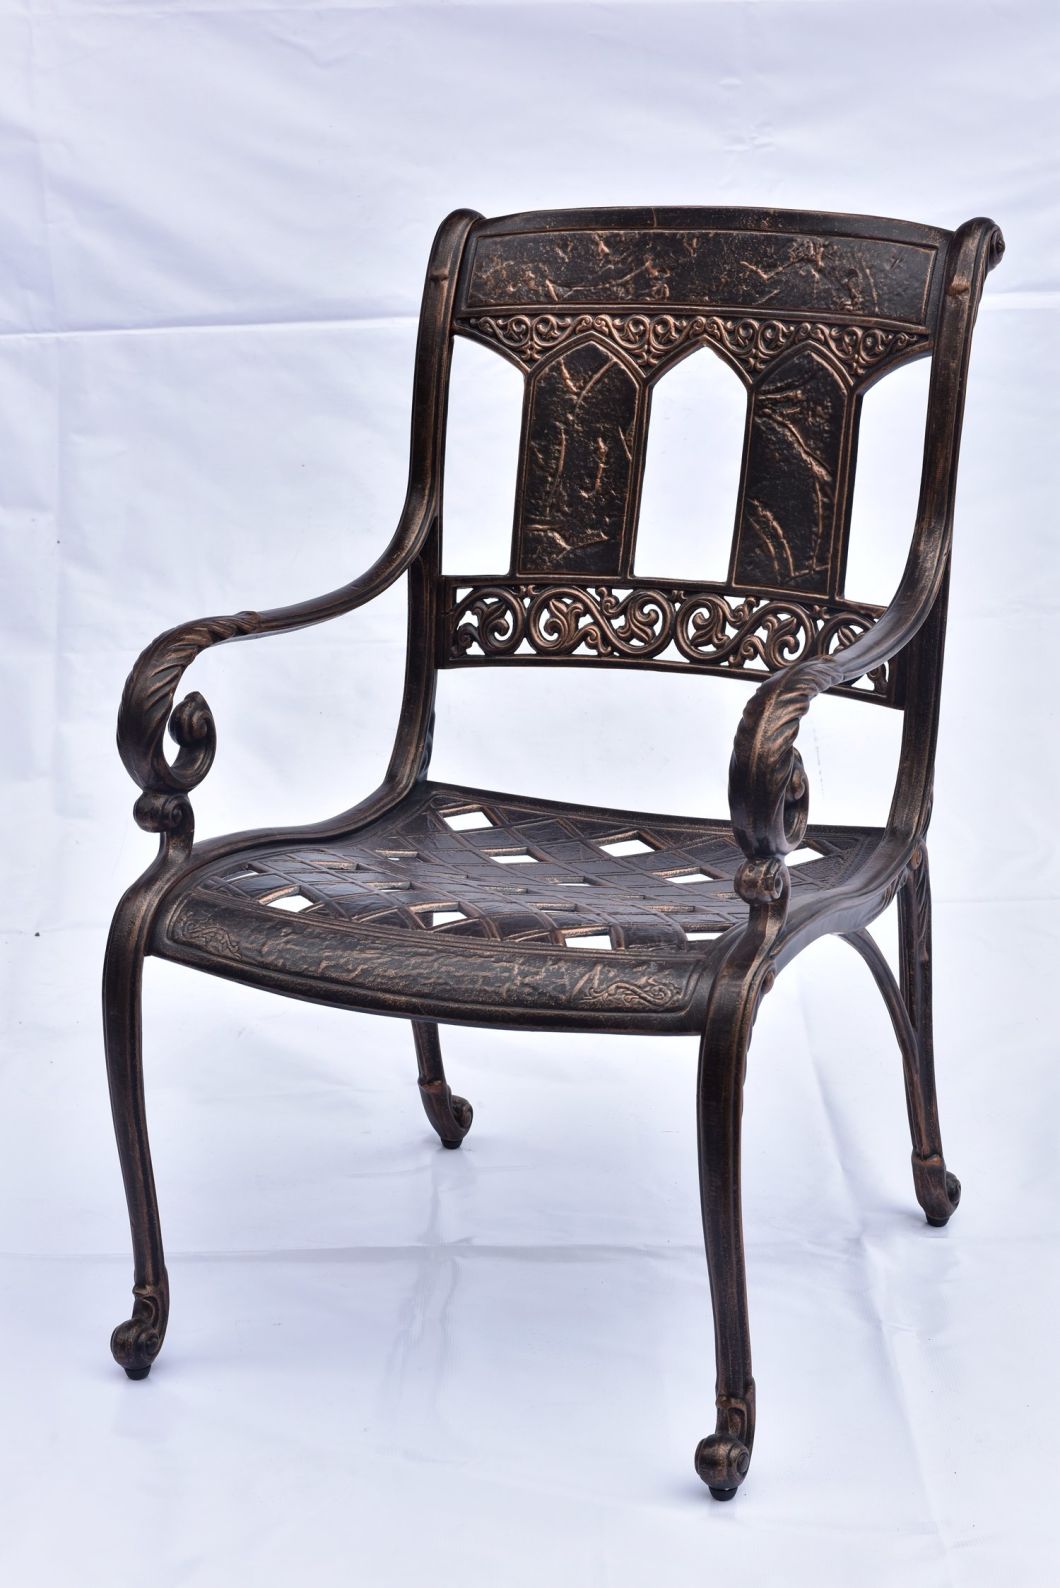 Cast Aluminum Tea Table and Chair Set Garden Furniture Outdoor Furniture-T002